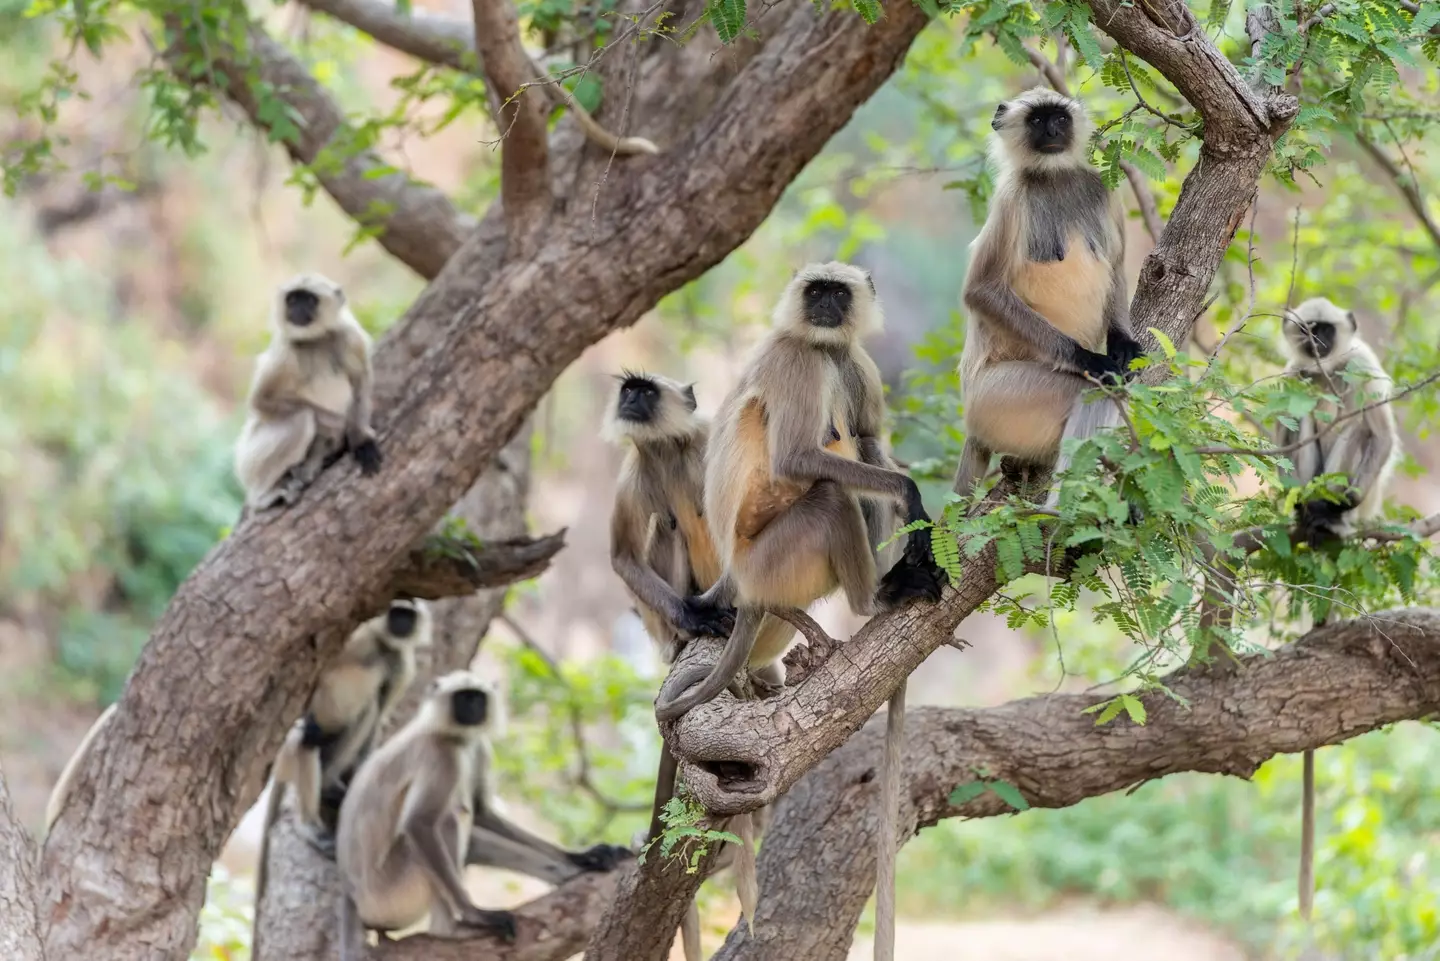 Stock image of langur monkeys.